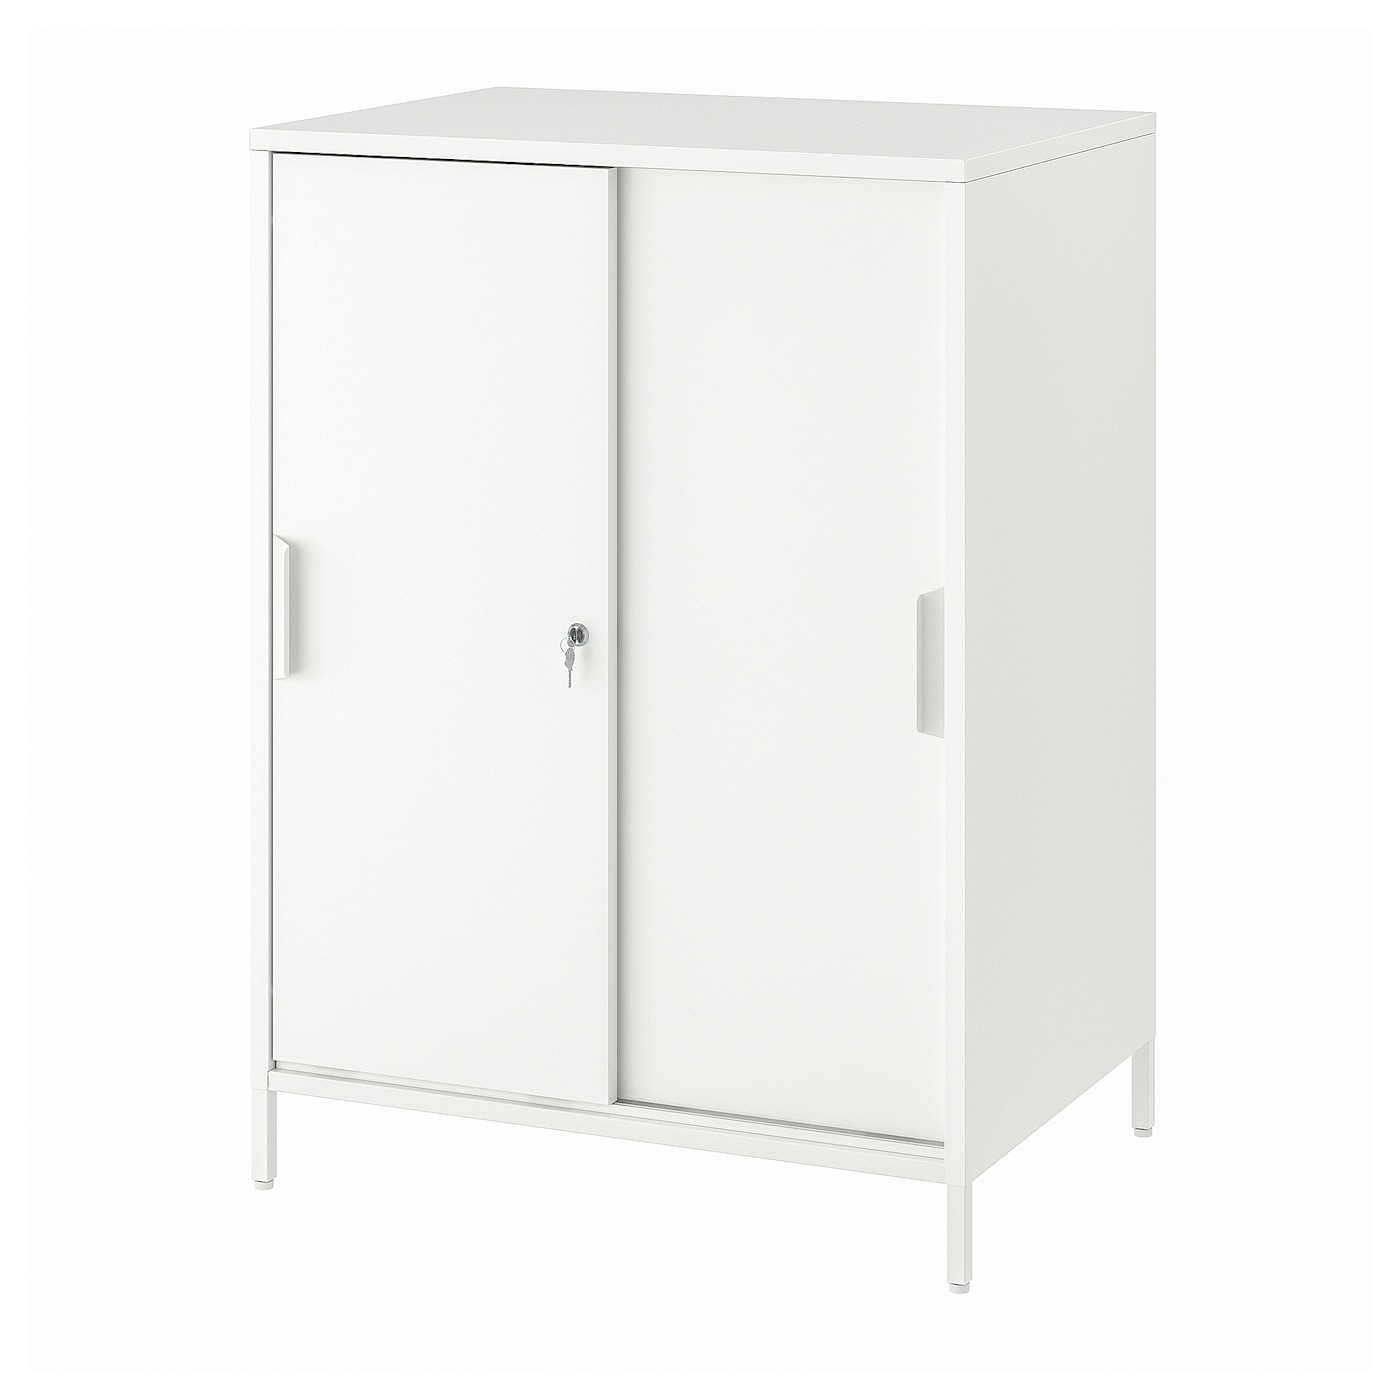 Шкаф-купе - IKEA TROTTEN, белый, 80х55х110 см, ТРОТТЕН ИКЕА